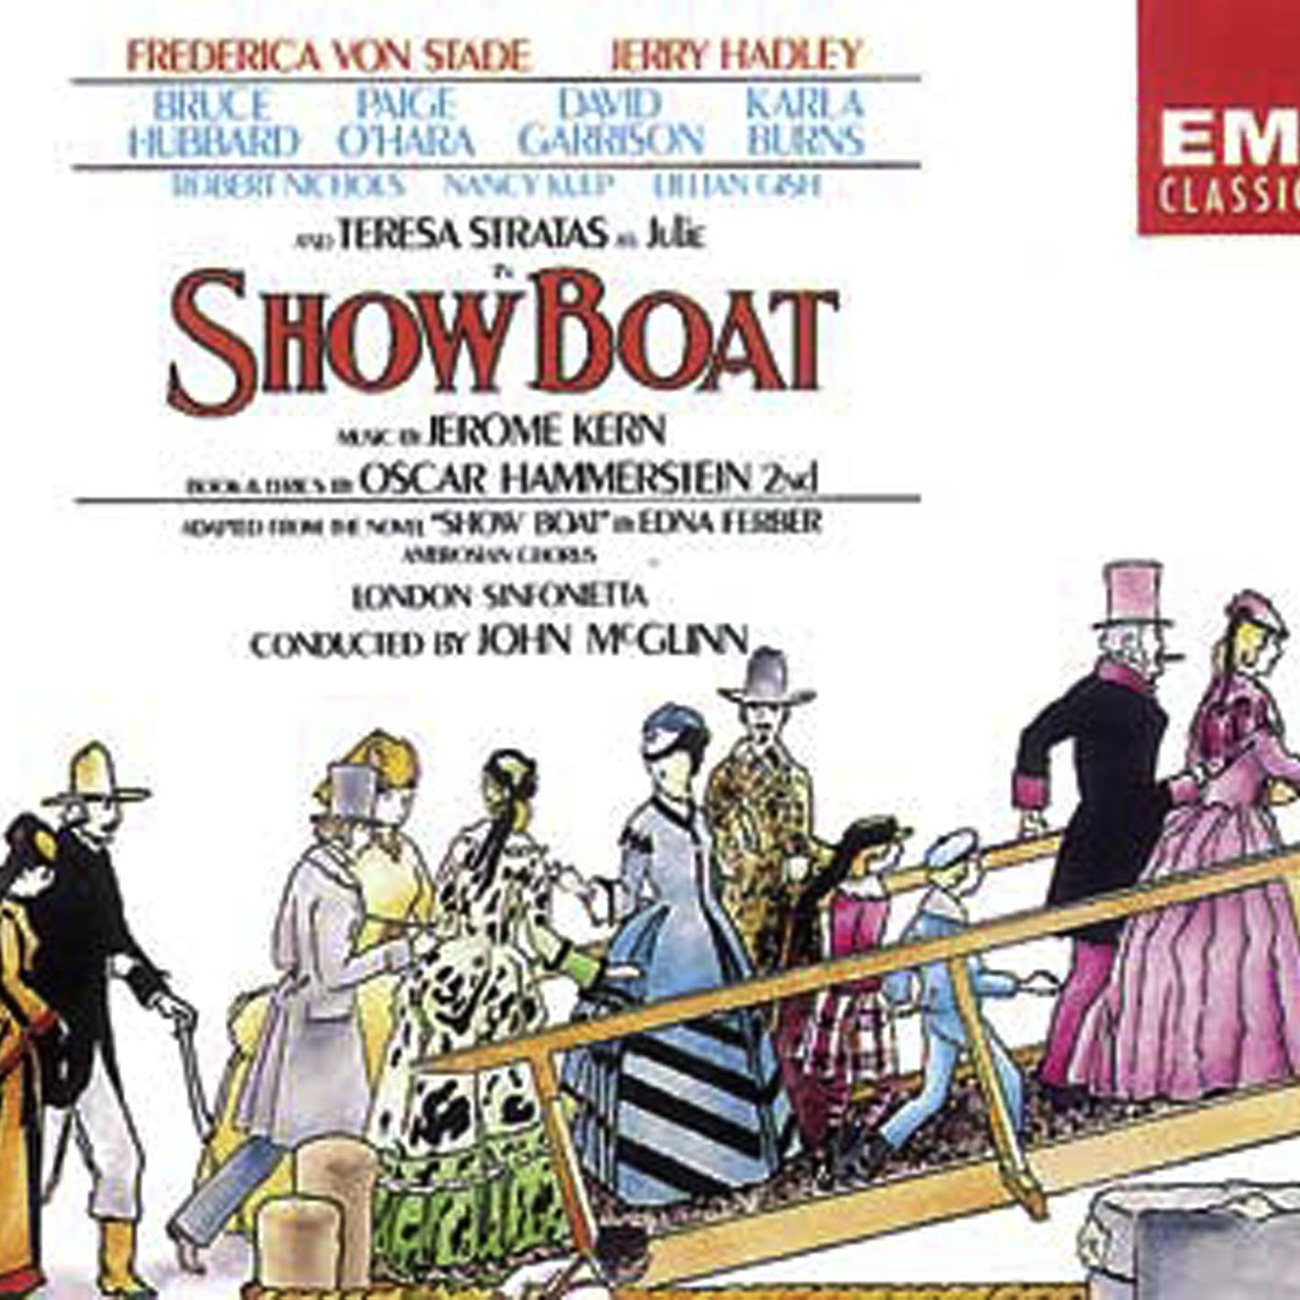 Show Boat, ACT 2, Scene 4: 'Whaddaya say, boss? ...' to 'Sure! Great!'